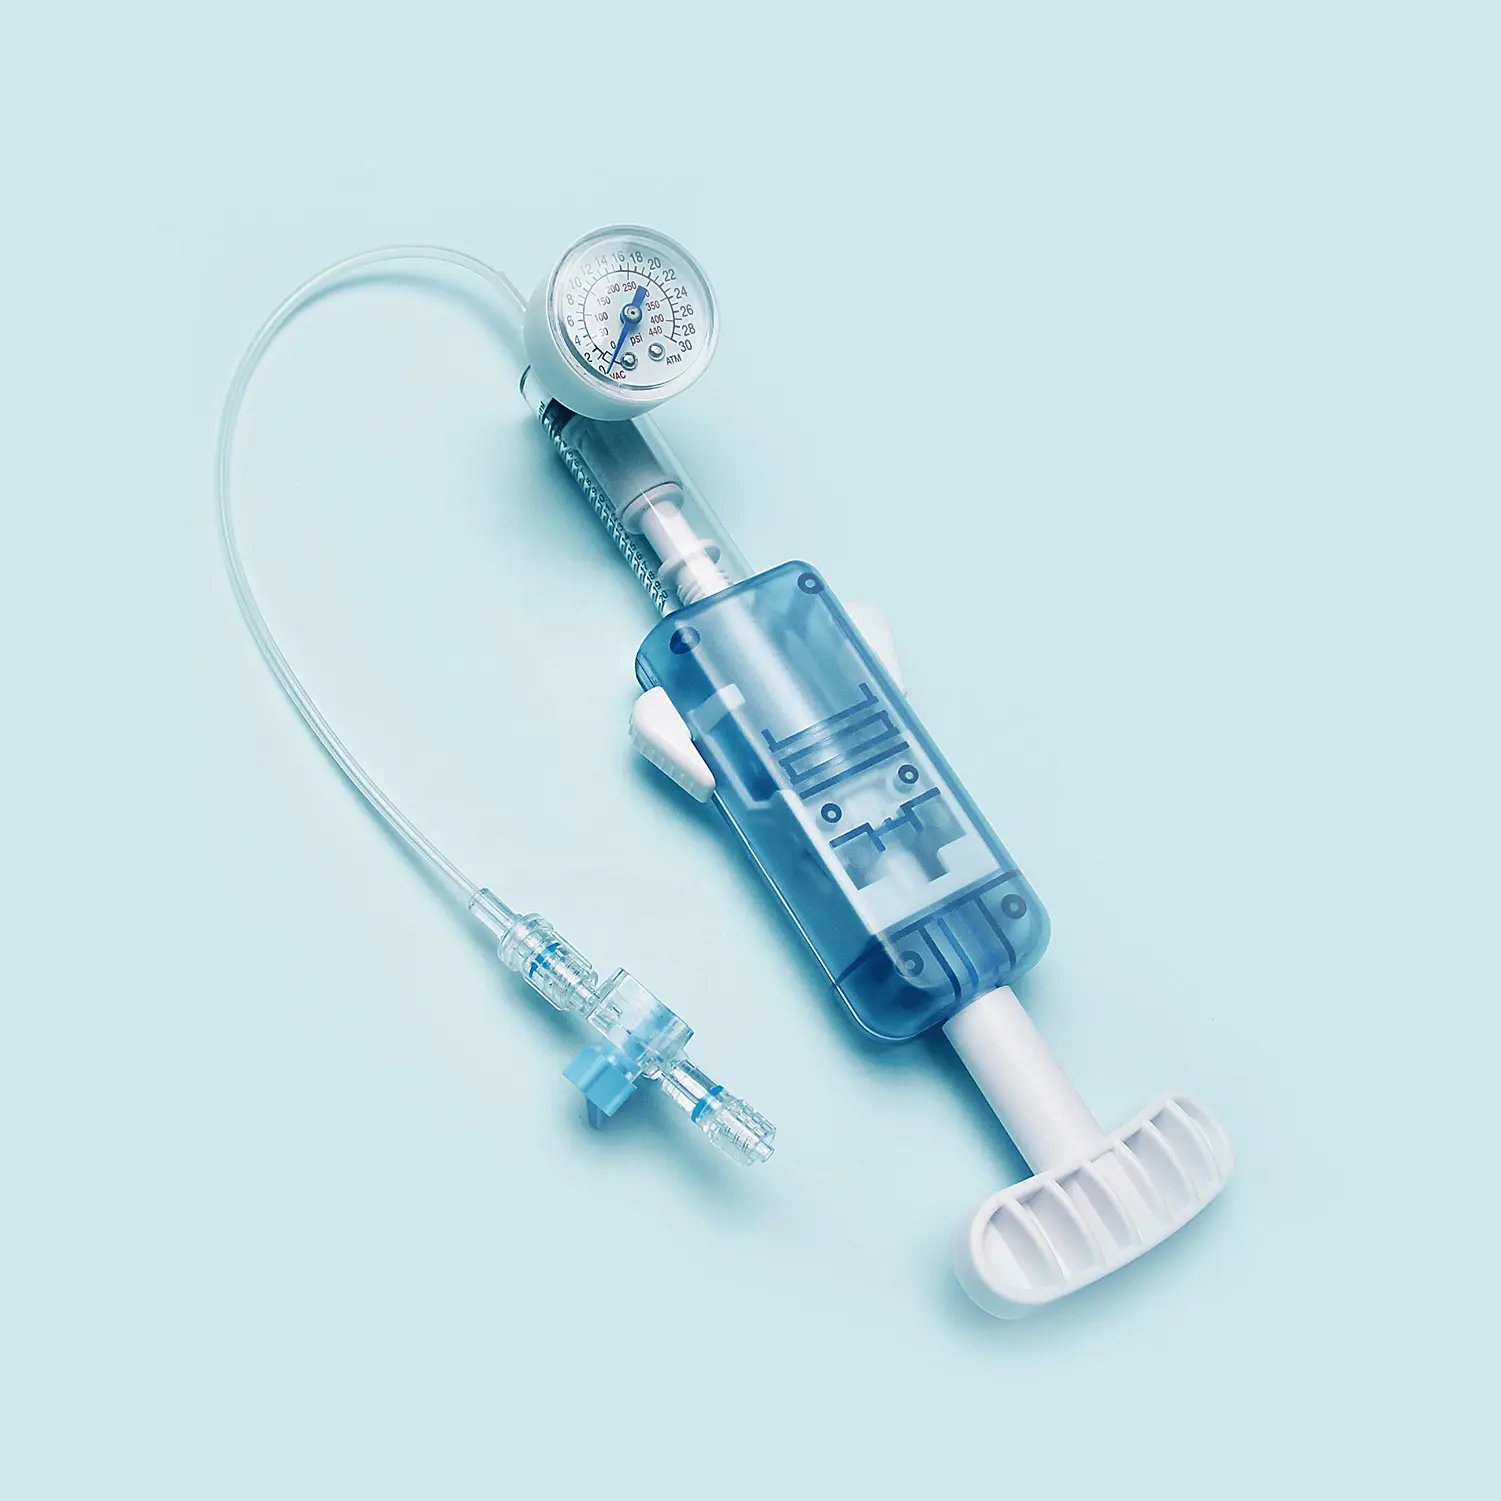 Tianck-inflador médico desechable, jeringa, manómetro de dilatación vascular, dispositivo de inflado de globos, 20ml, 30ATM